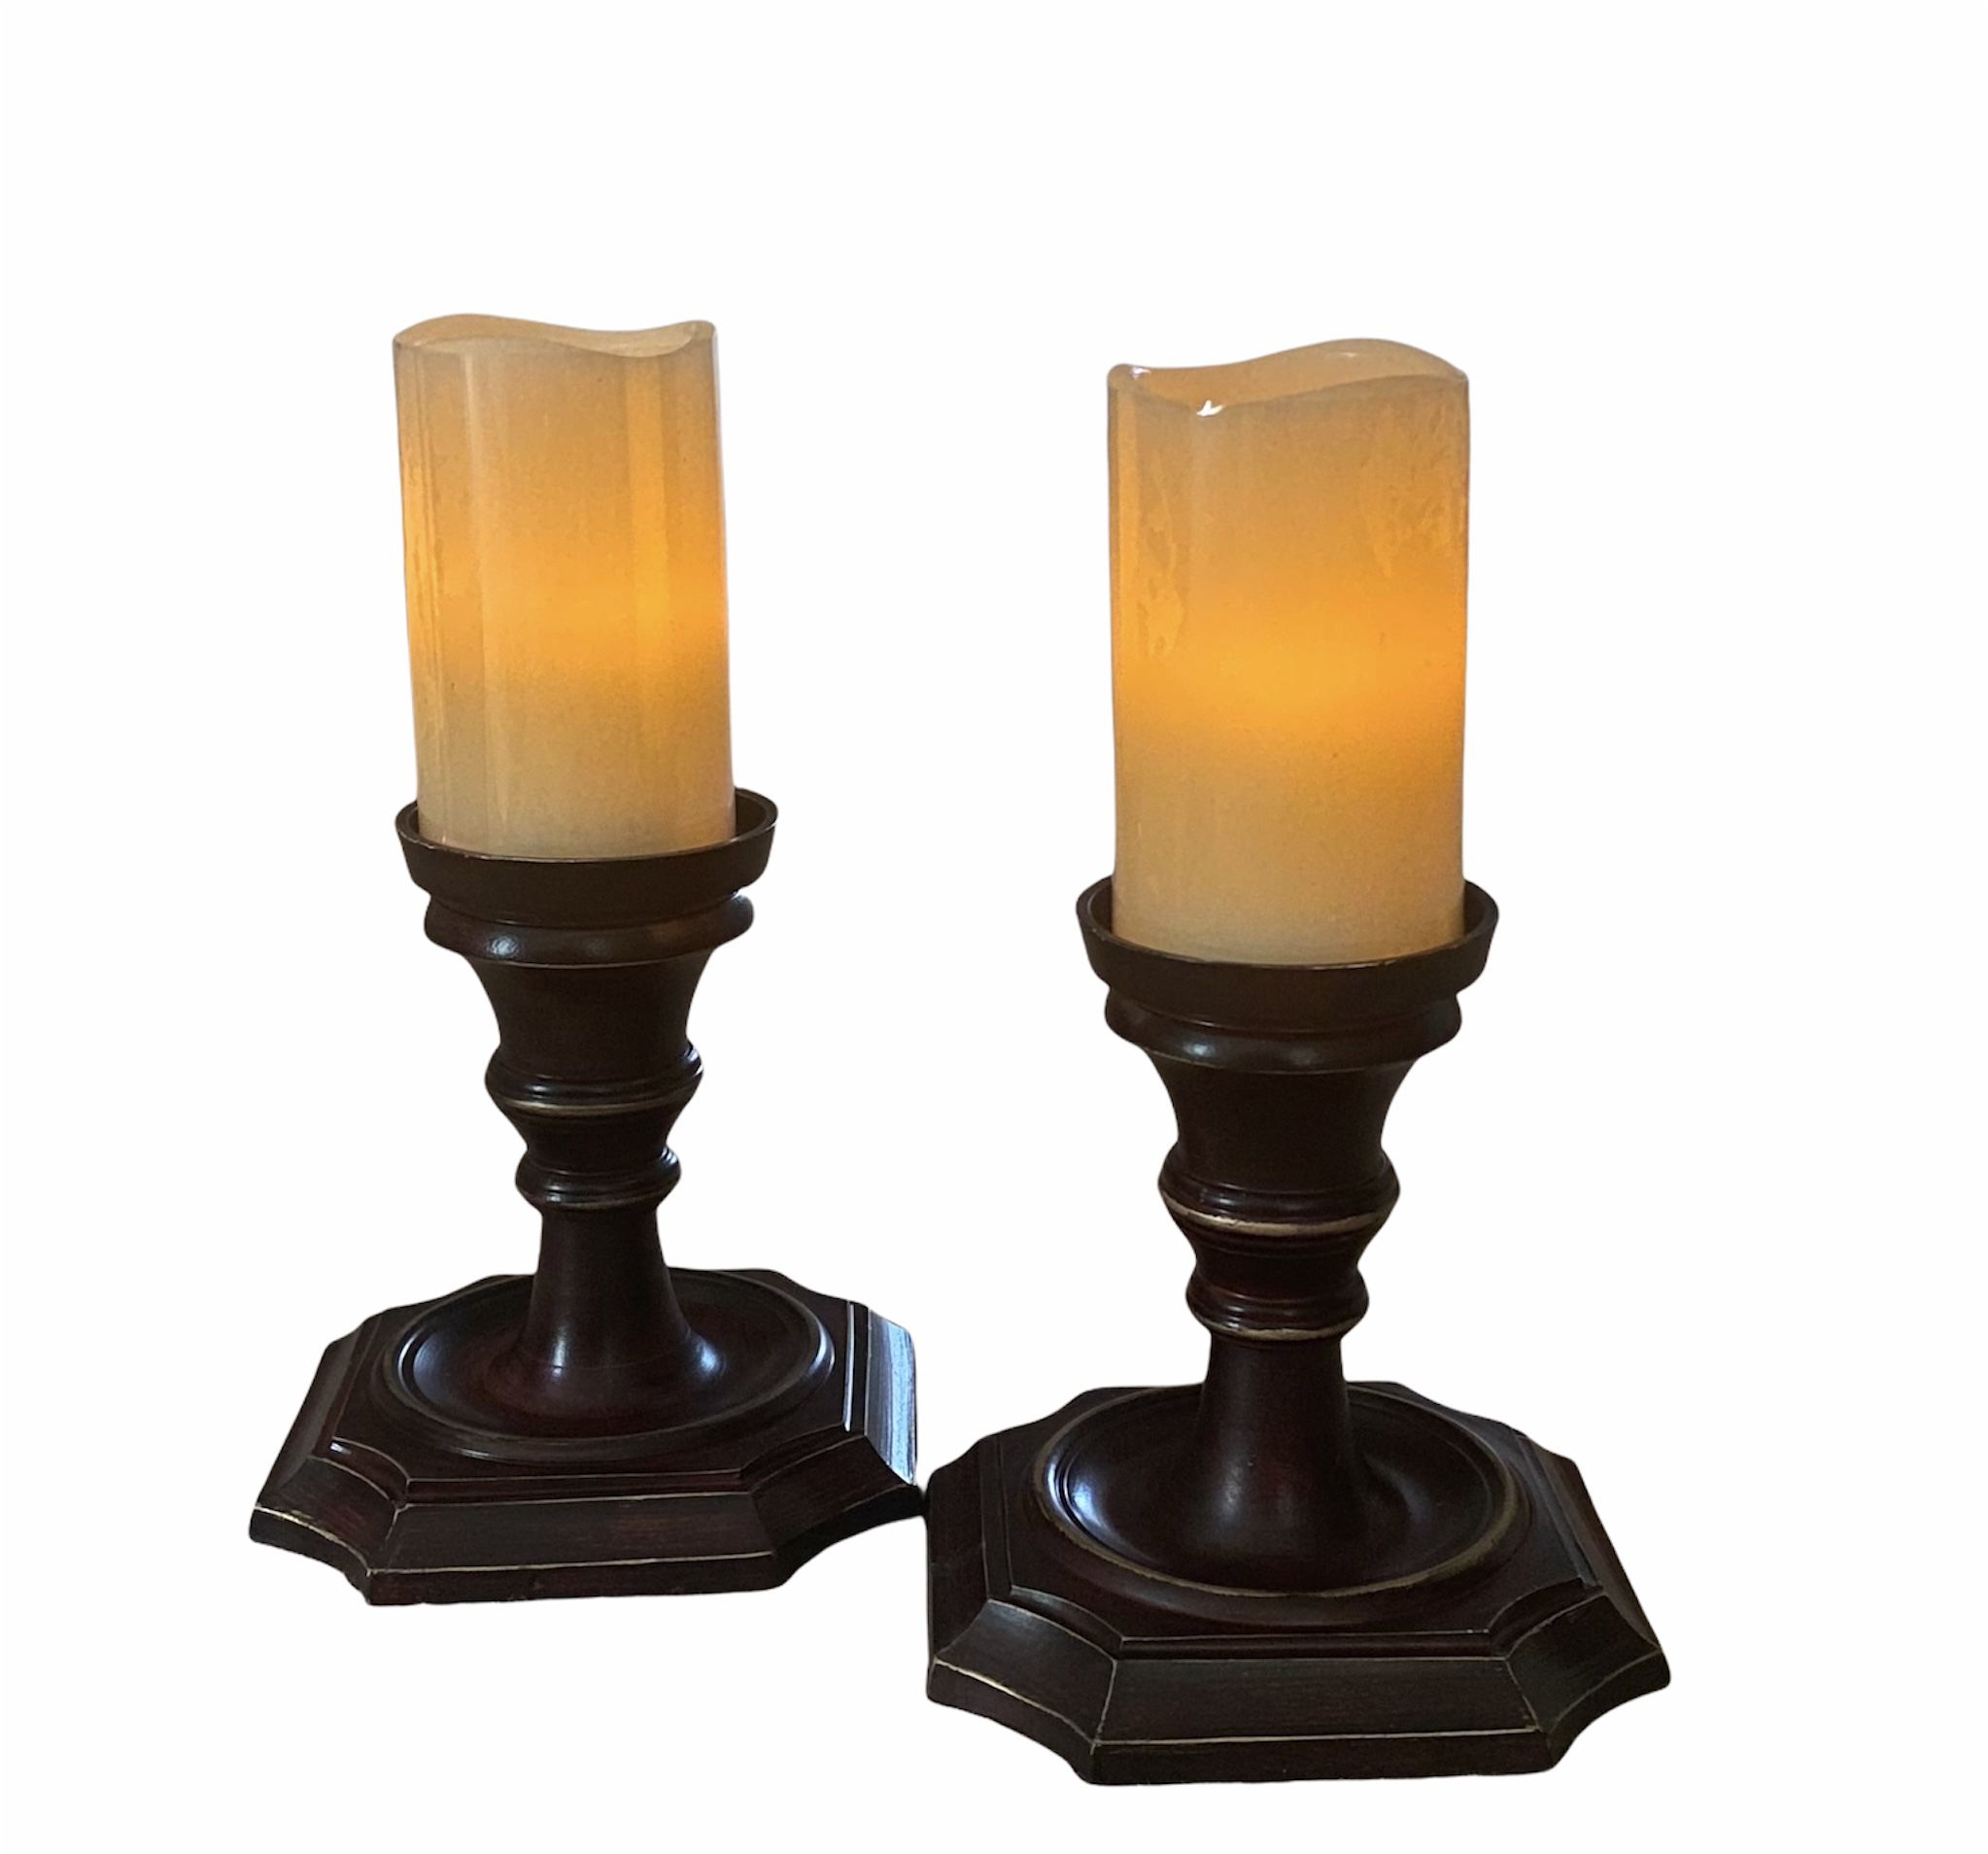 Pier 1 Imports Dark Brown Ceramic Pillar Candle Holders - New